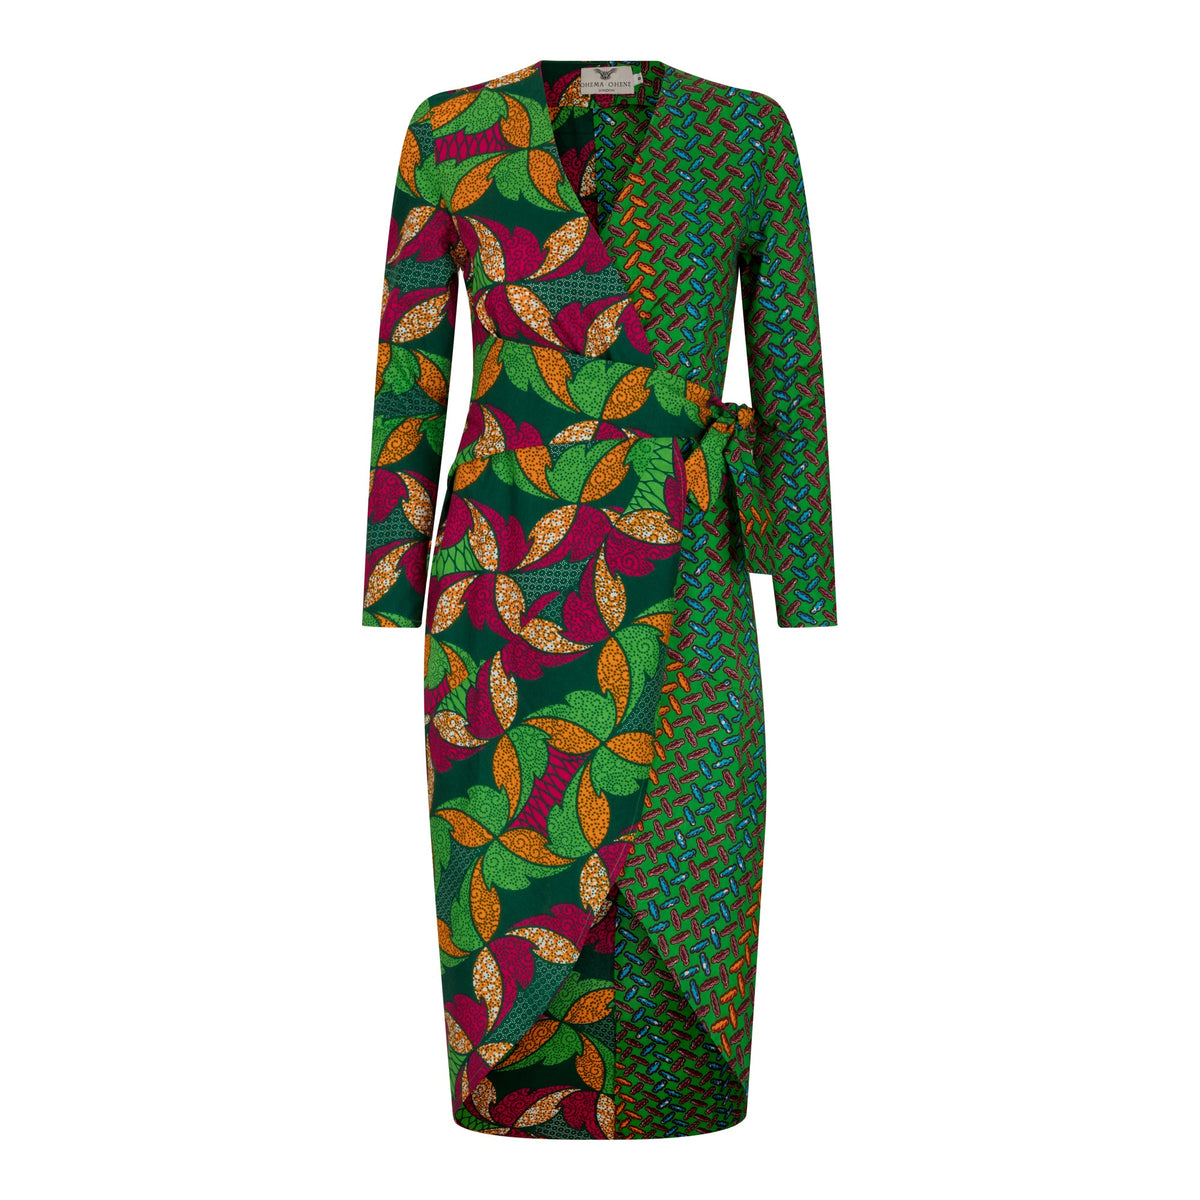 Jennifer contrast African print Midaxi dress-Green - OHEMA OHENE AFRICAN INSPIRED FASHION